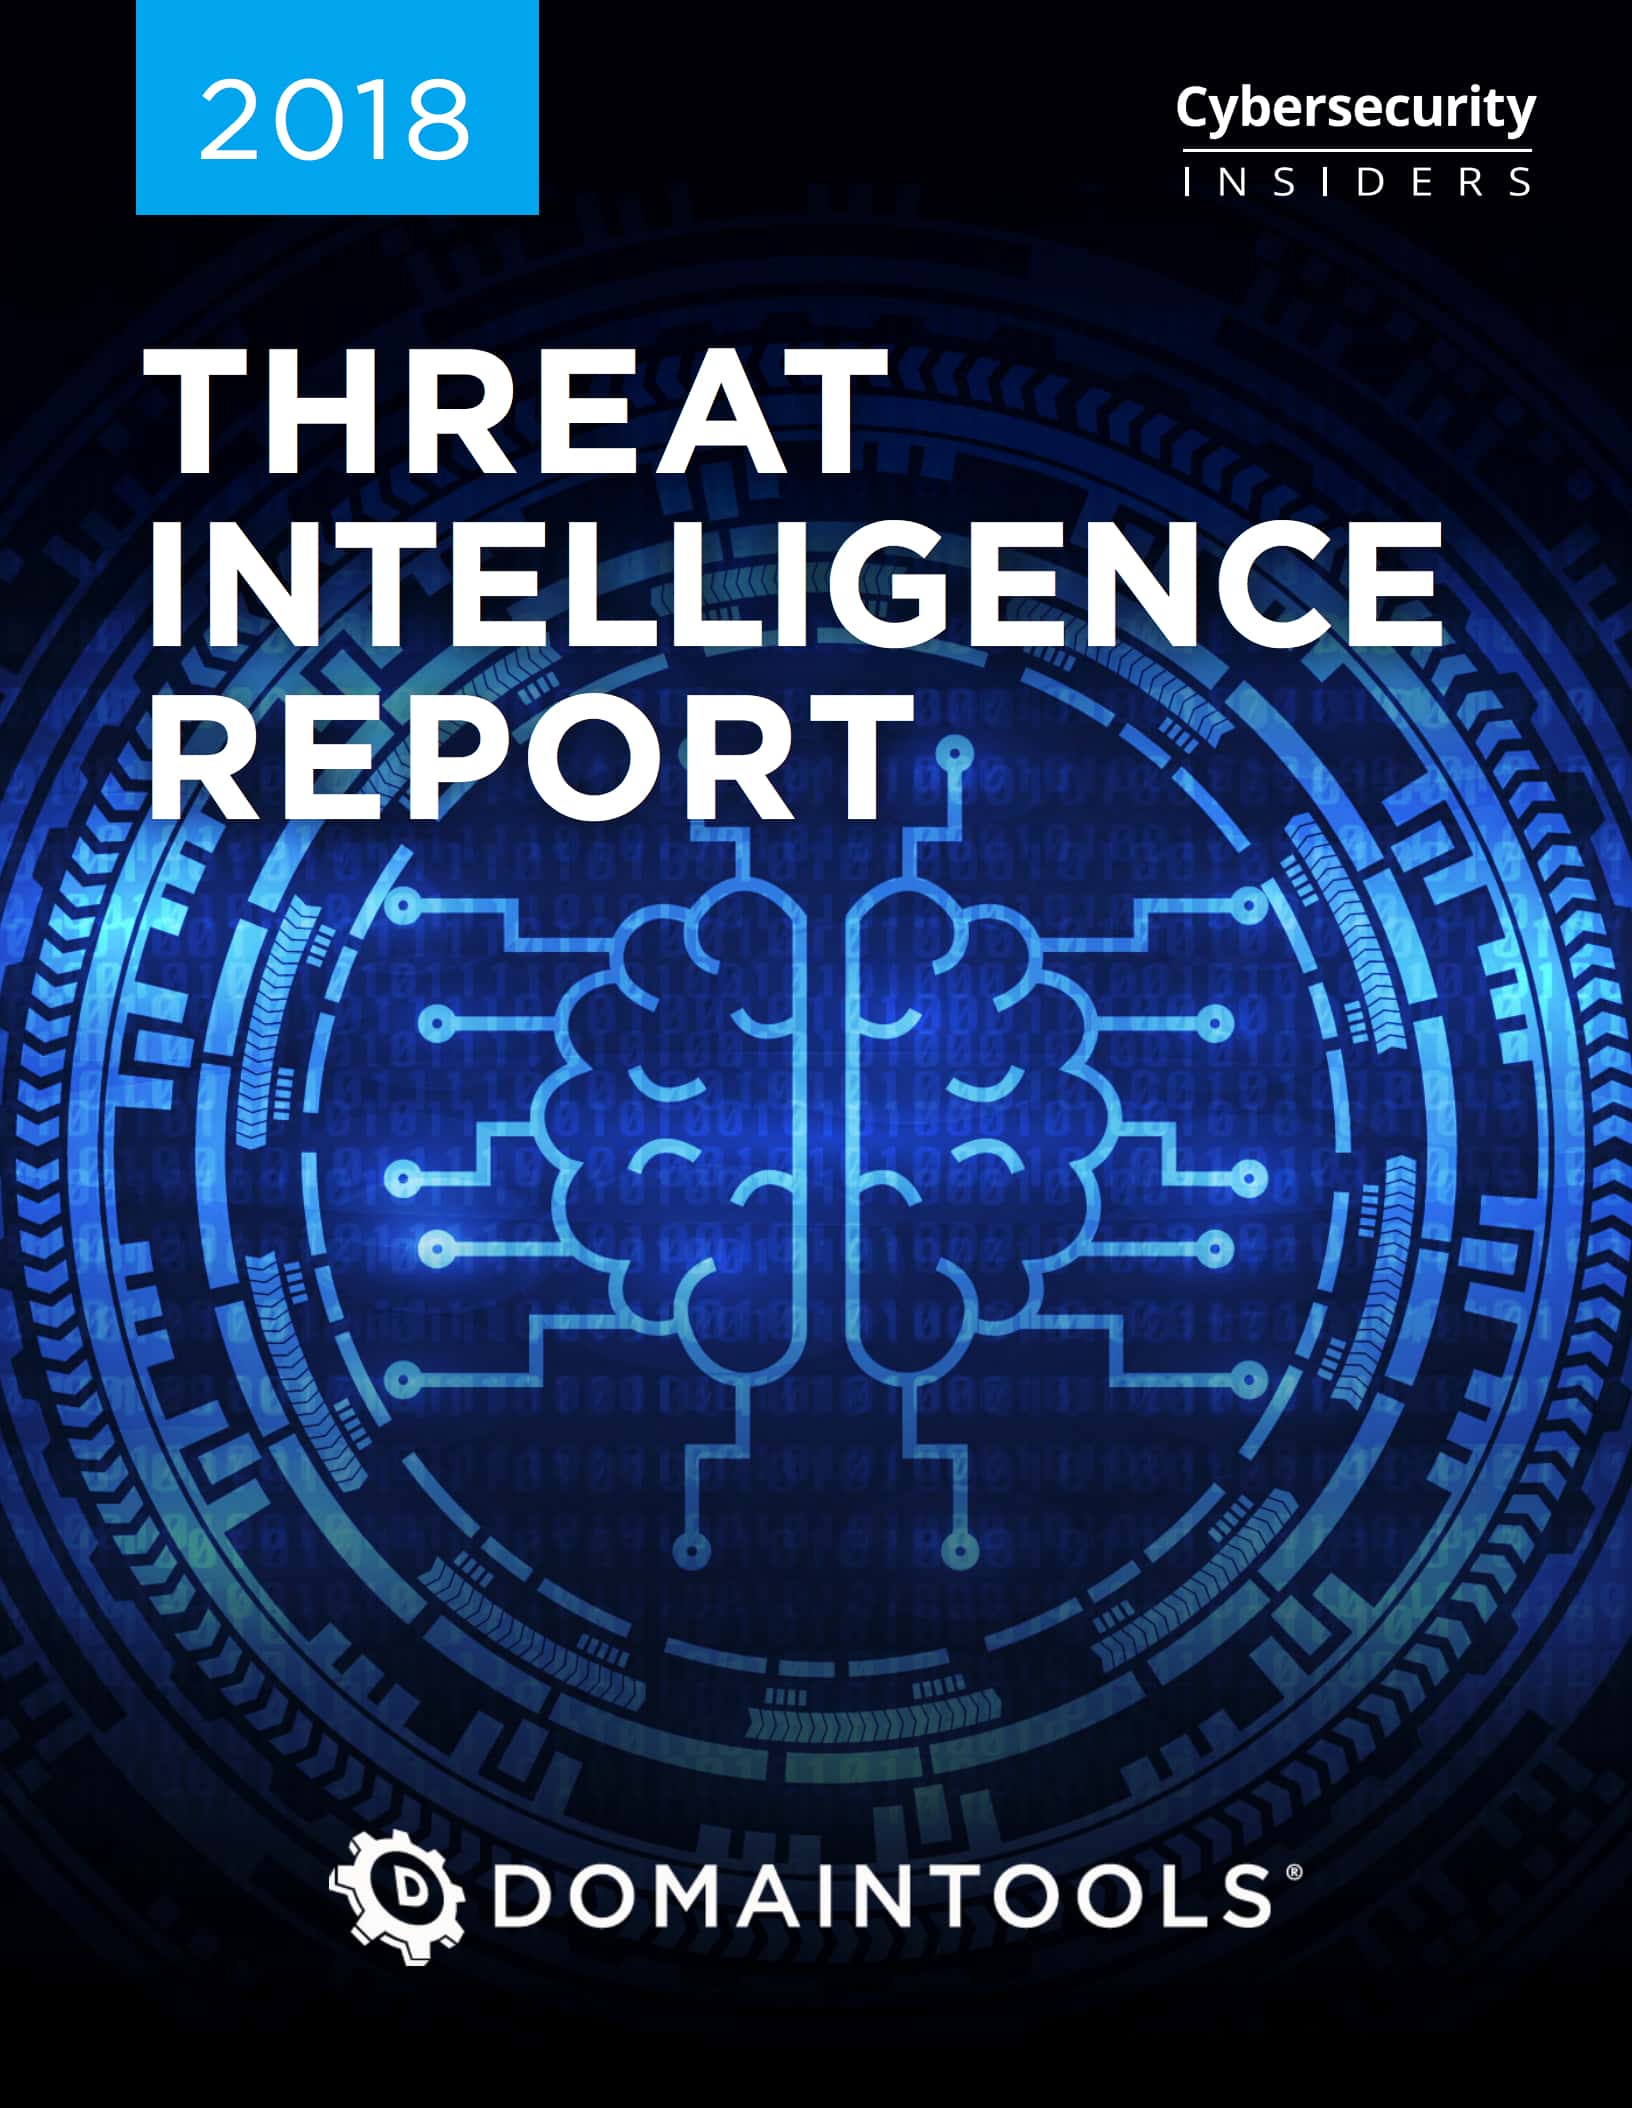 2018 threat intelligence report.